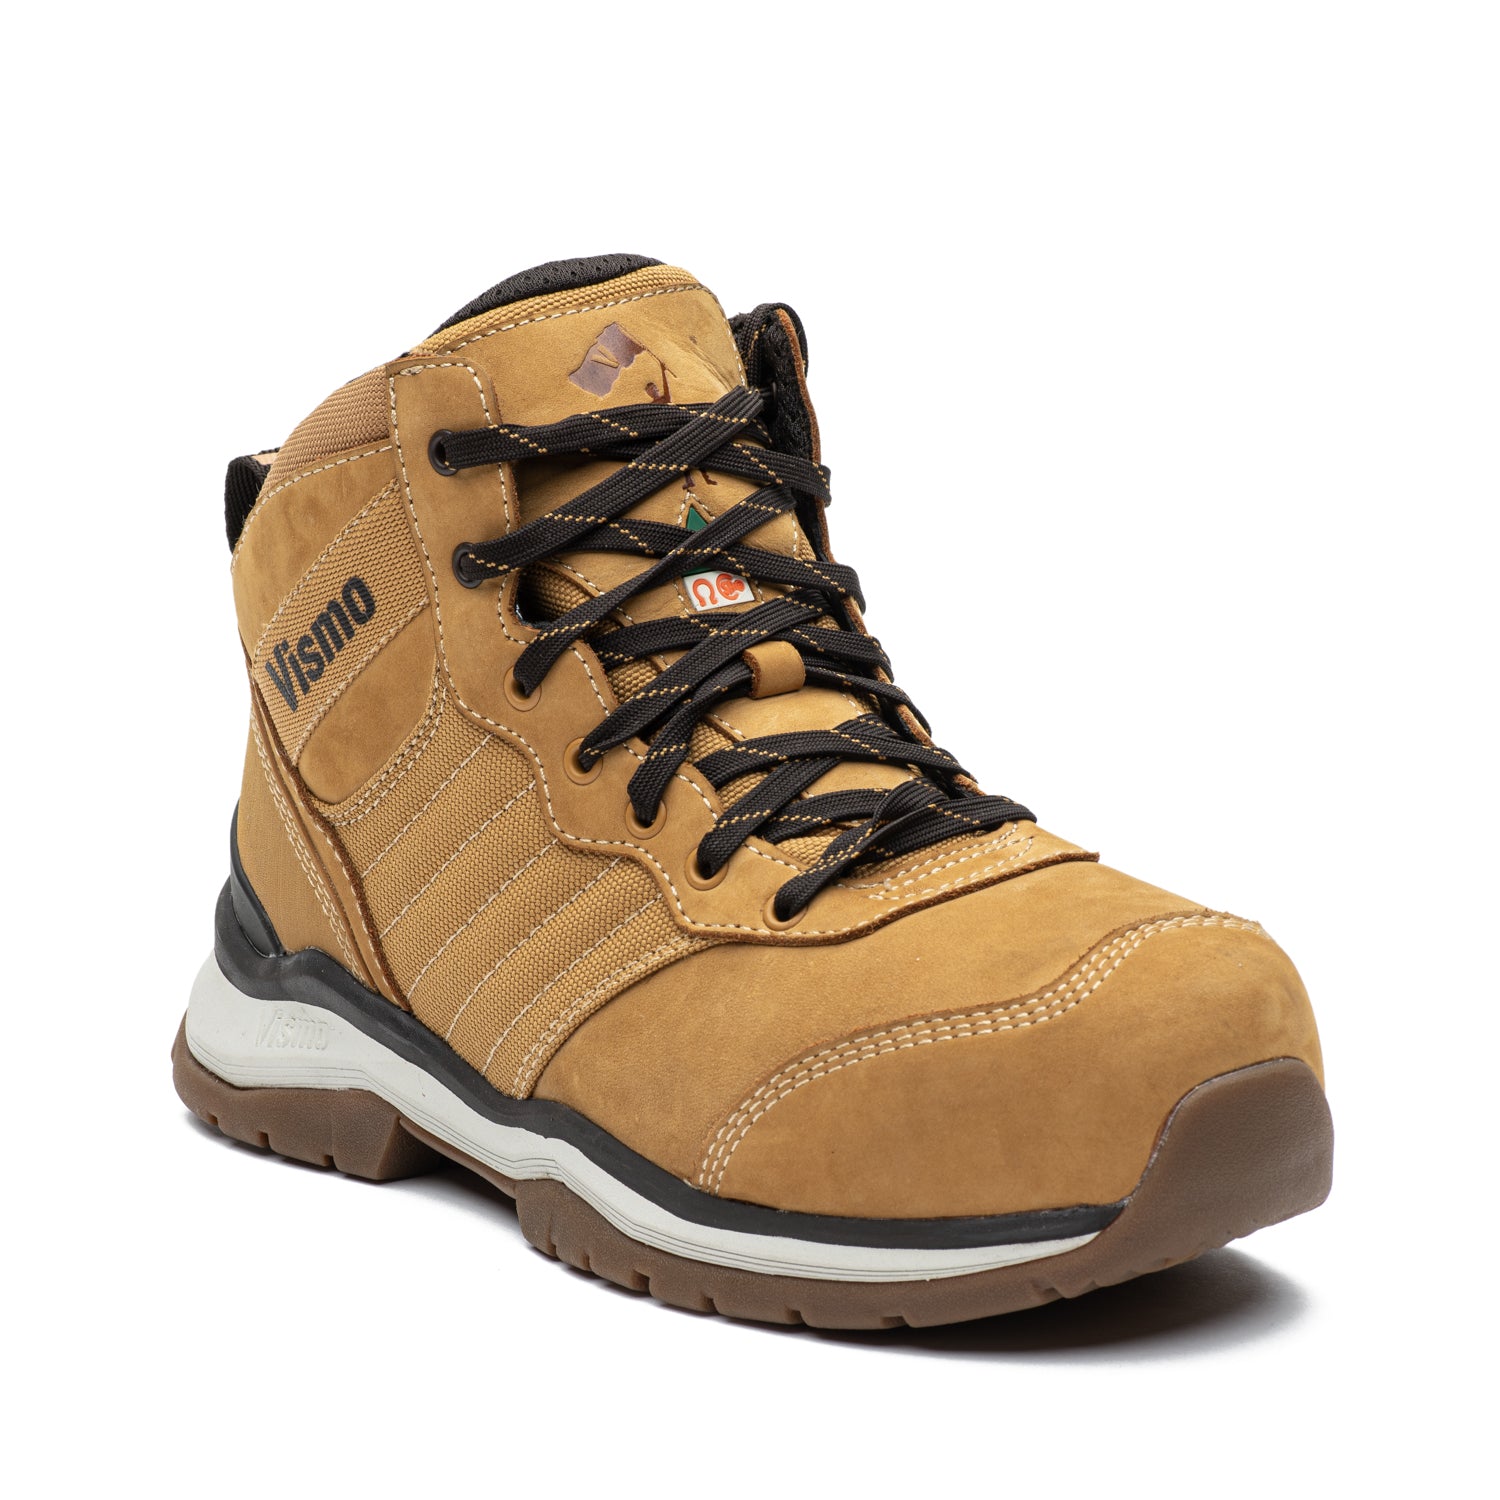 NRG55 Men's Hiker Aluminum Toe Work Boots W12